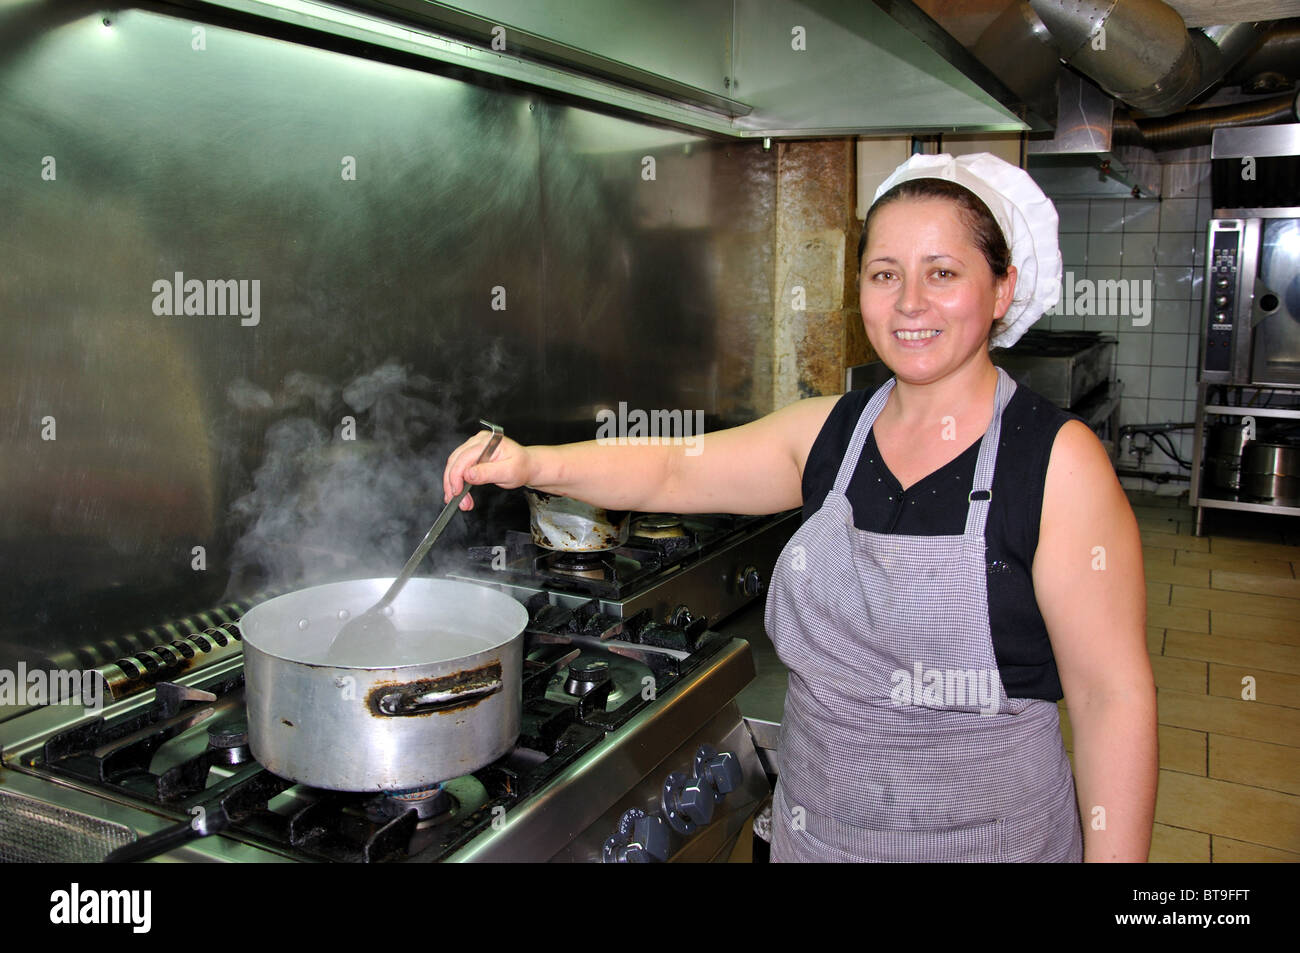 Junge Frau kocht in Tavernenküche, Argostoli, Kefalonia (Cephalonia), Ionische Inseln, Griechenland Stockfoto